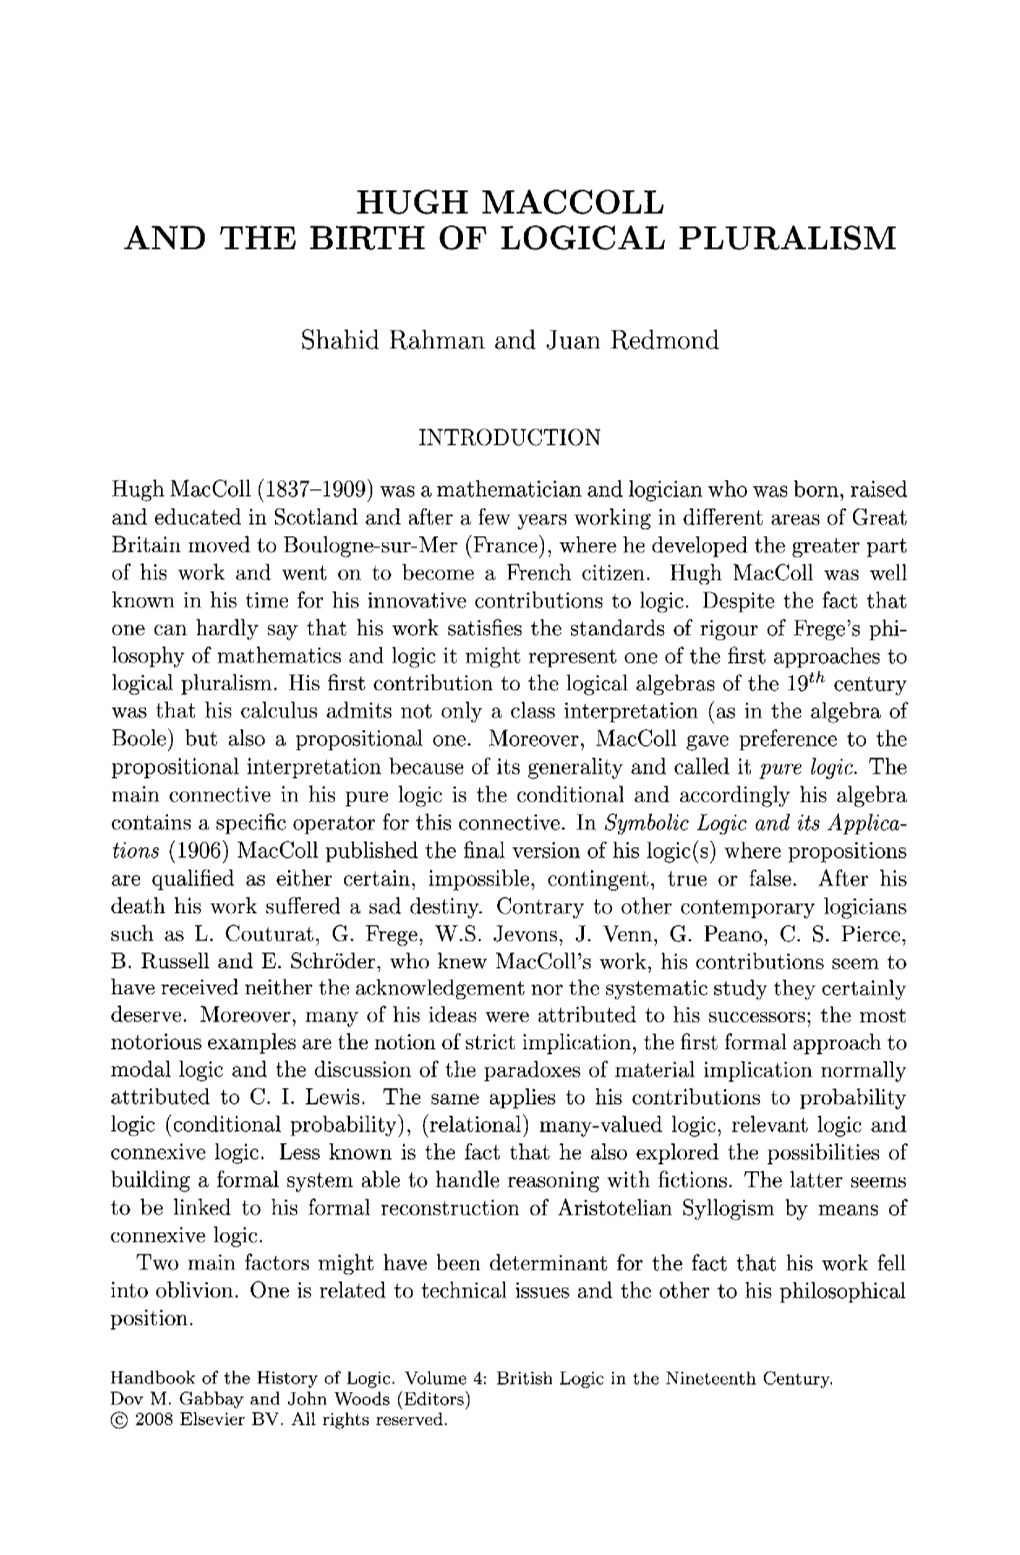 Hugh Maccoll and the Birth of Logical Pluralism